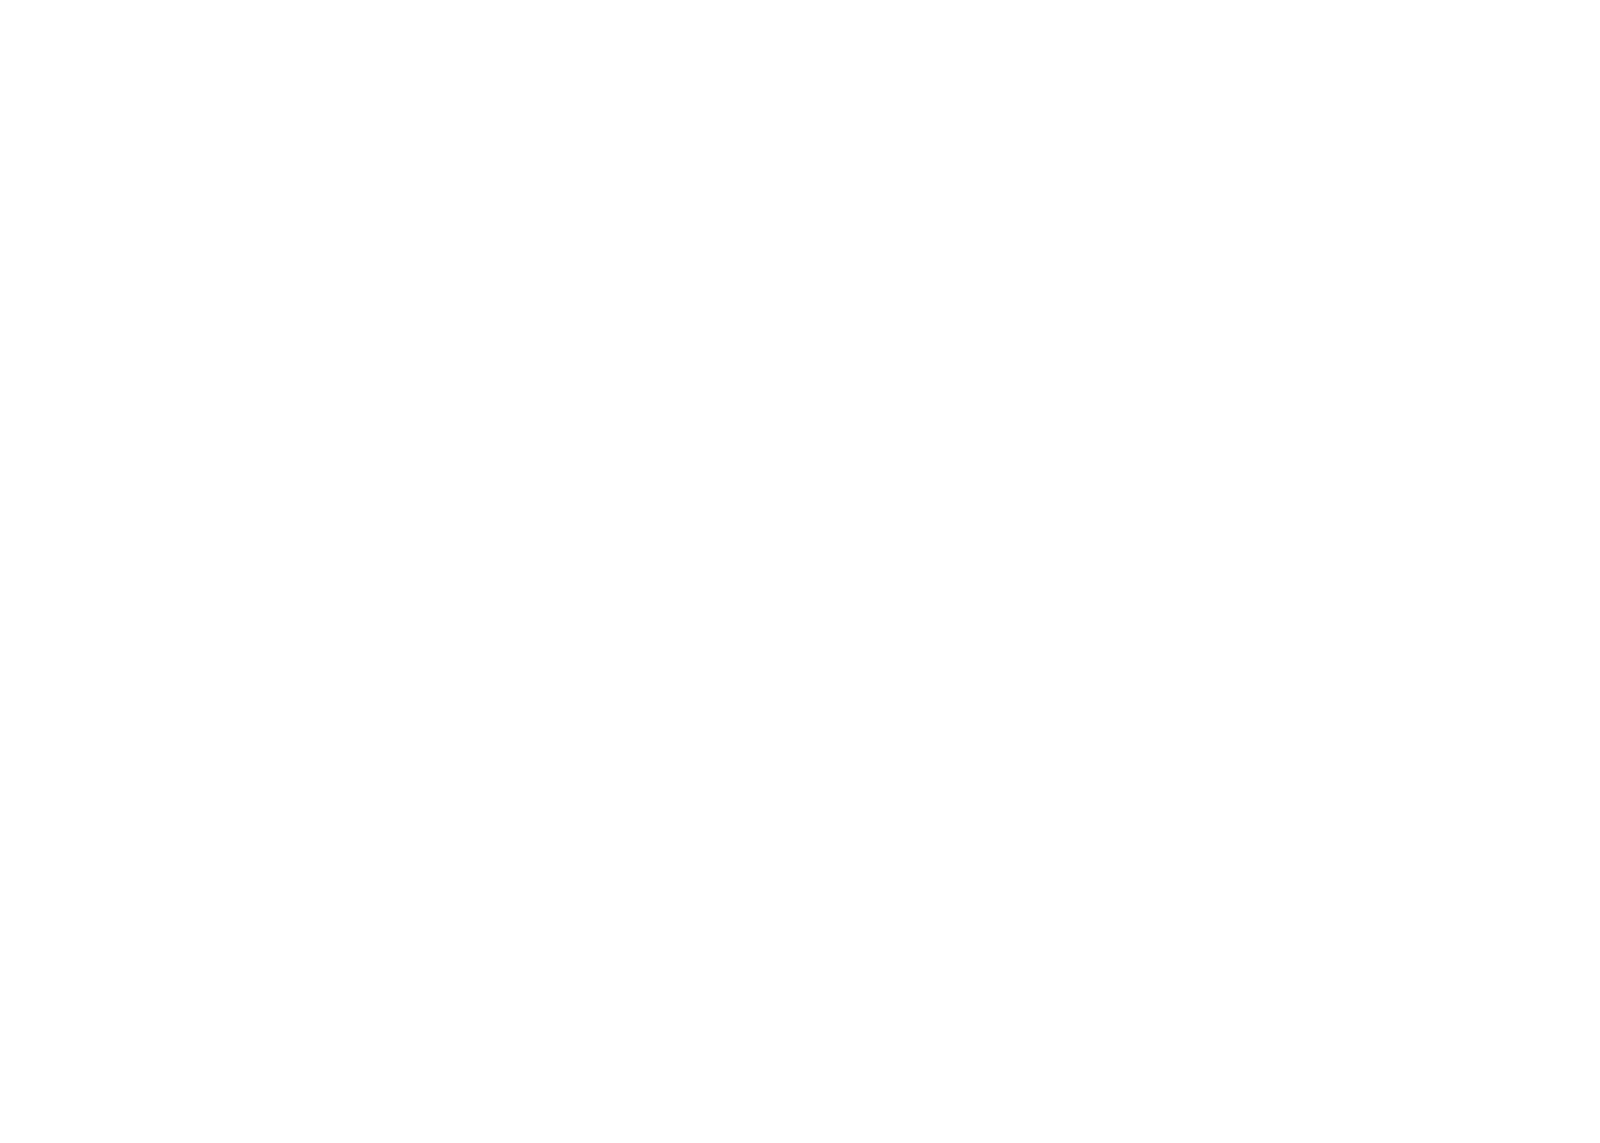 Flaherty Photography